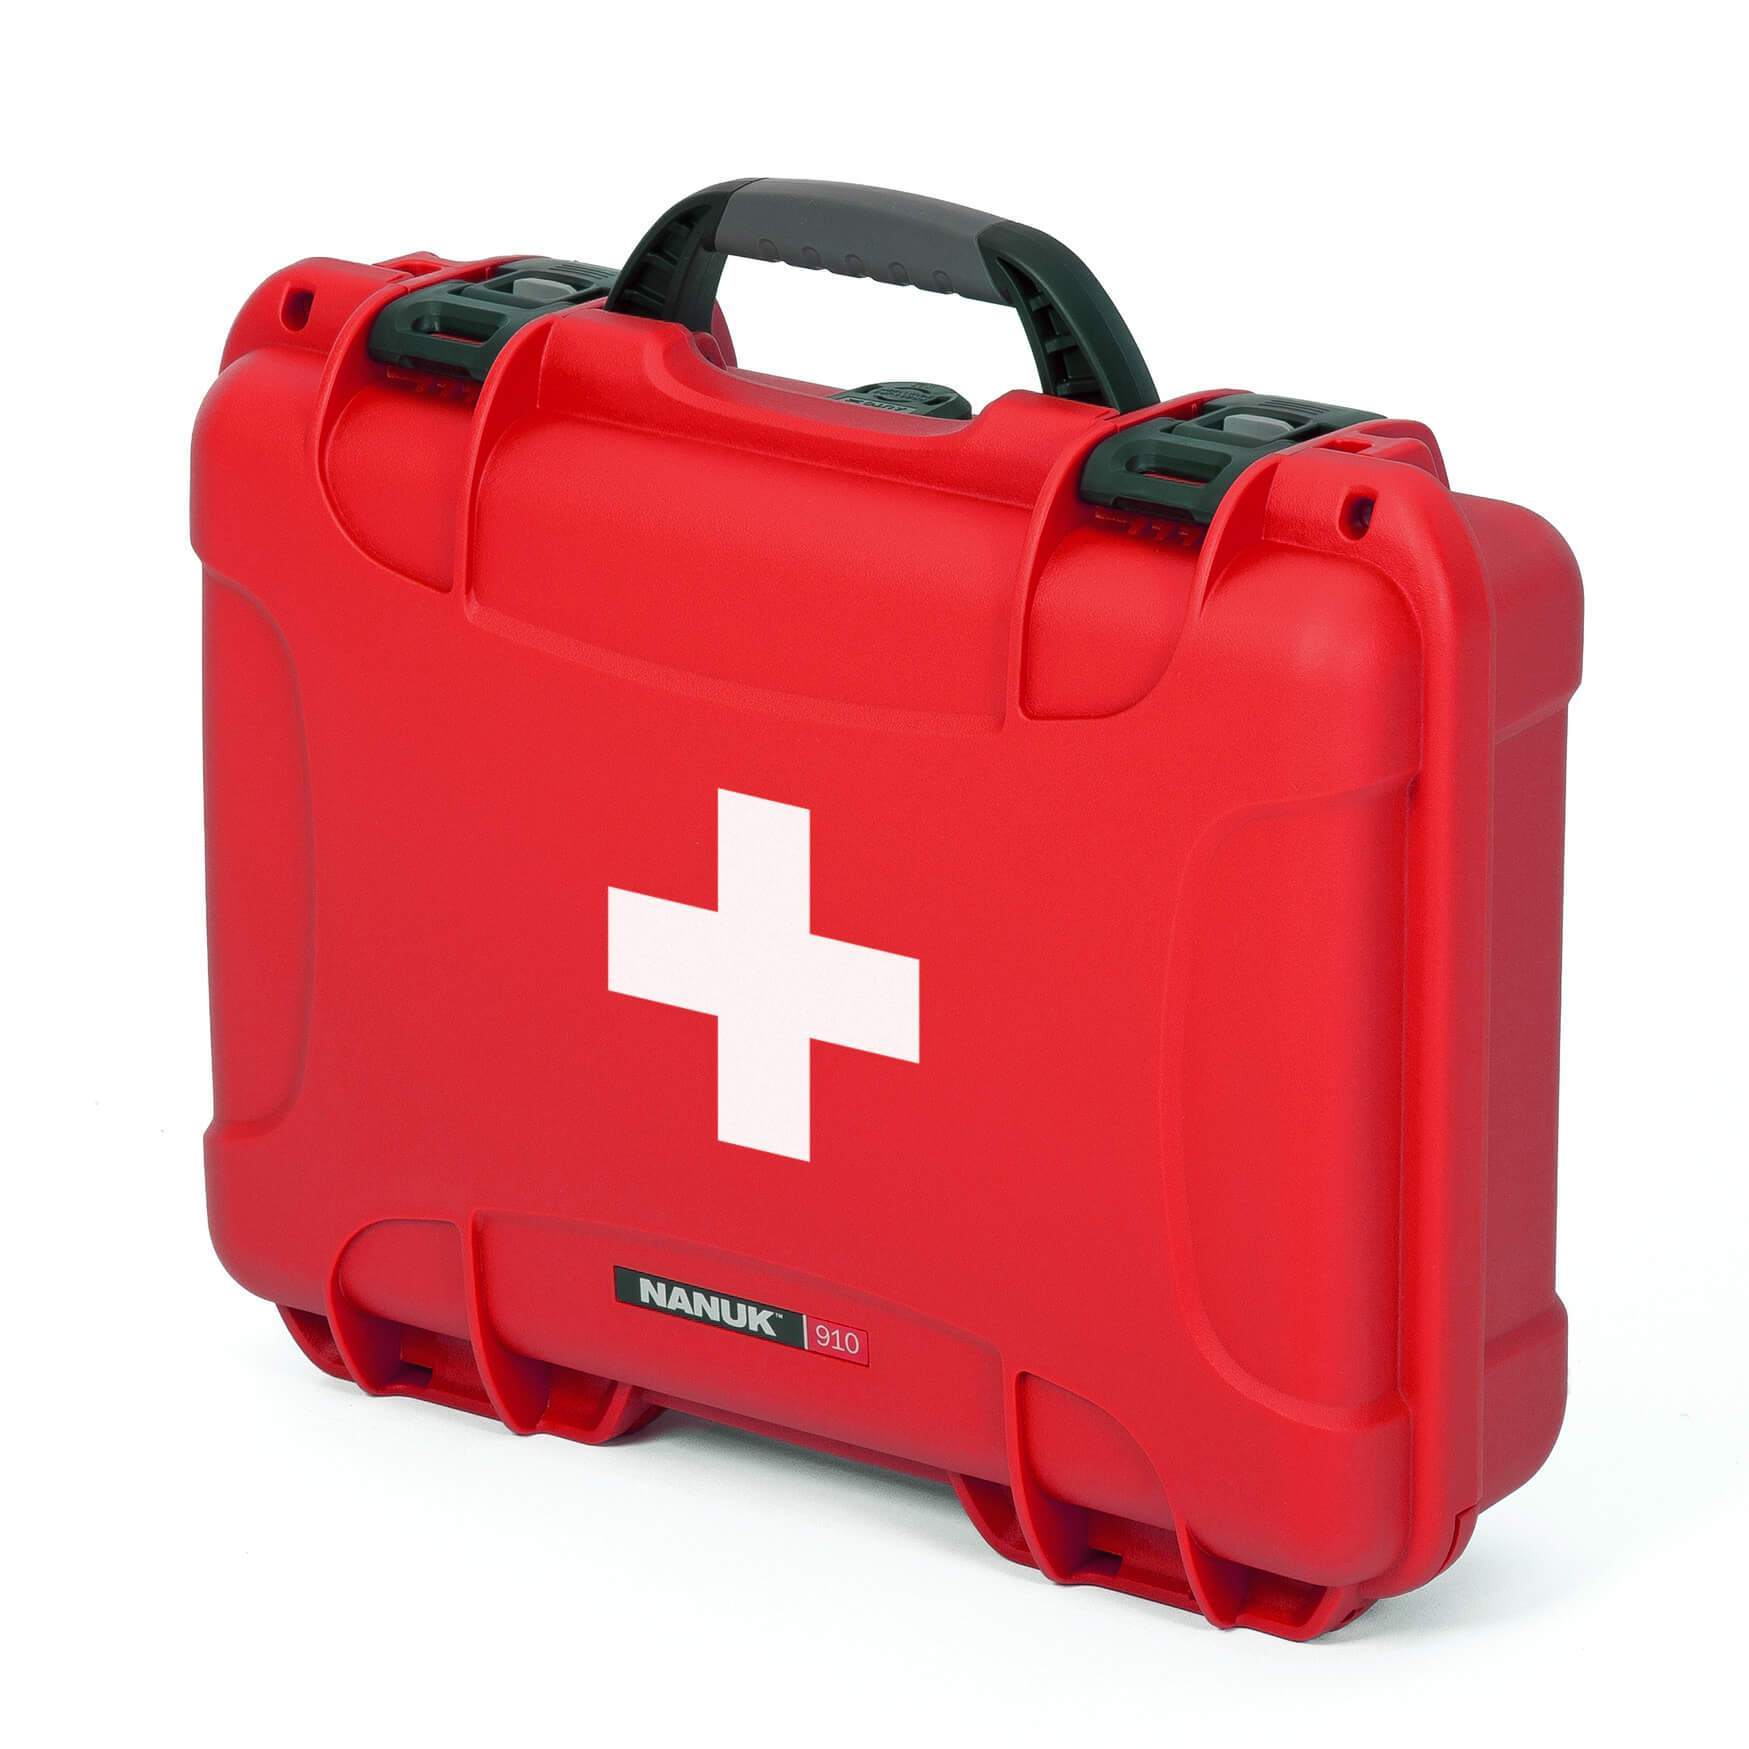 NANUK 910 First Aid valise-Outdoor Valise-Rouge-NANUK